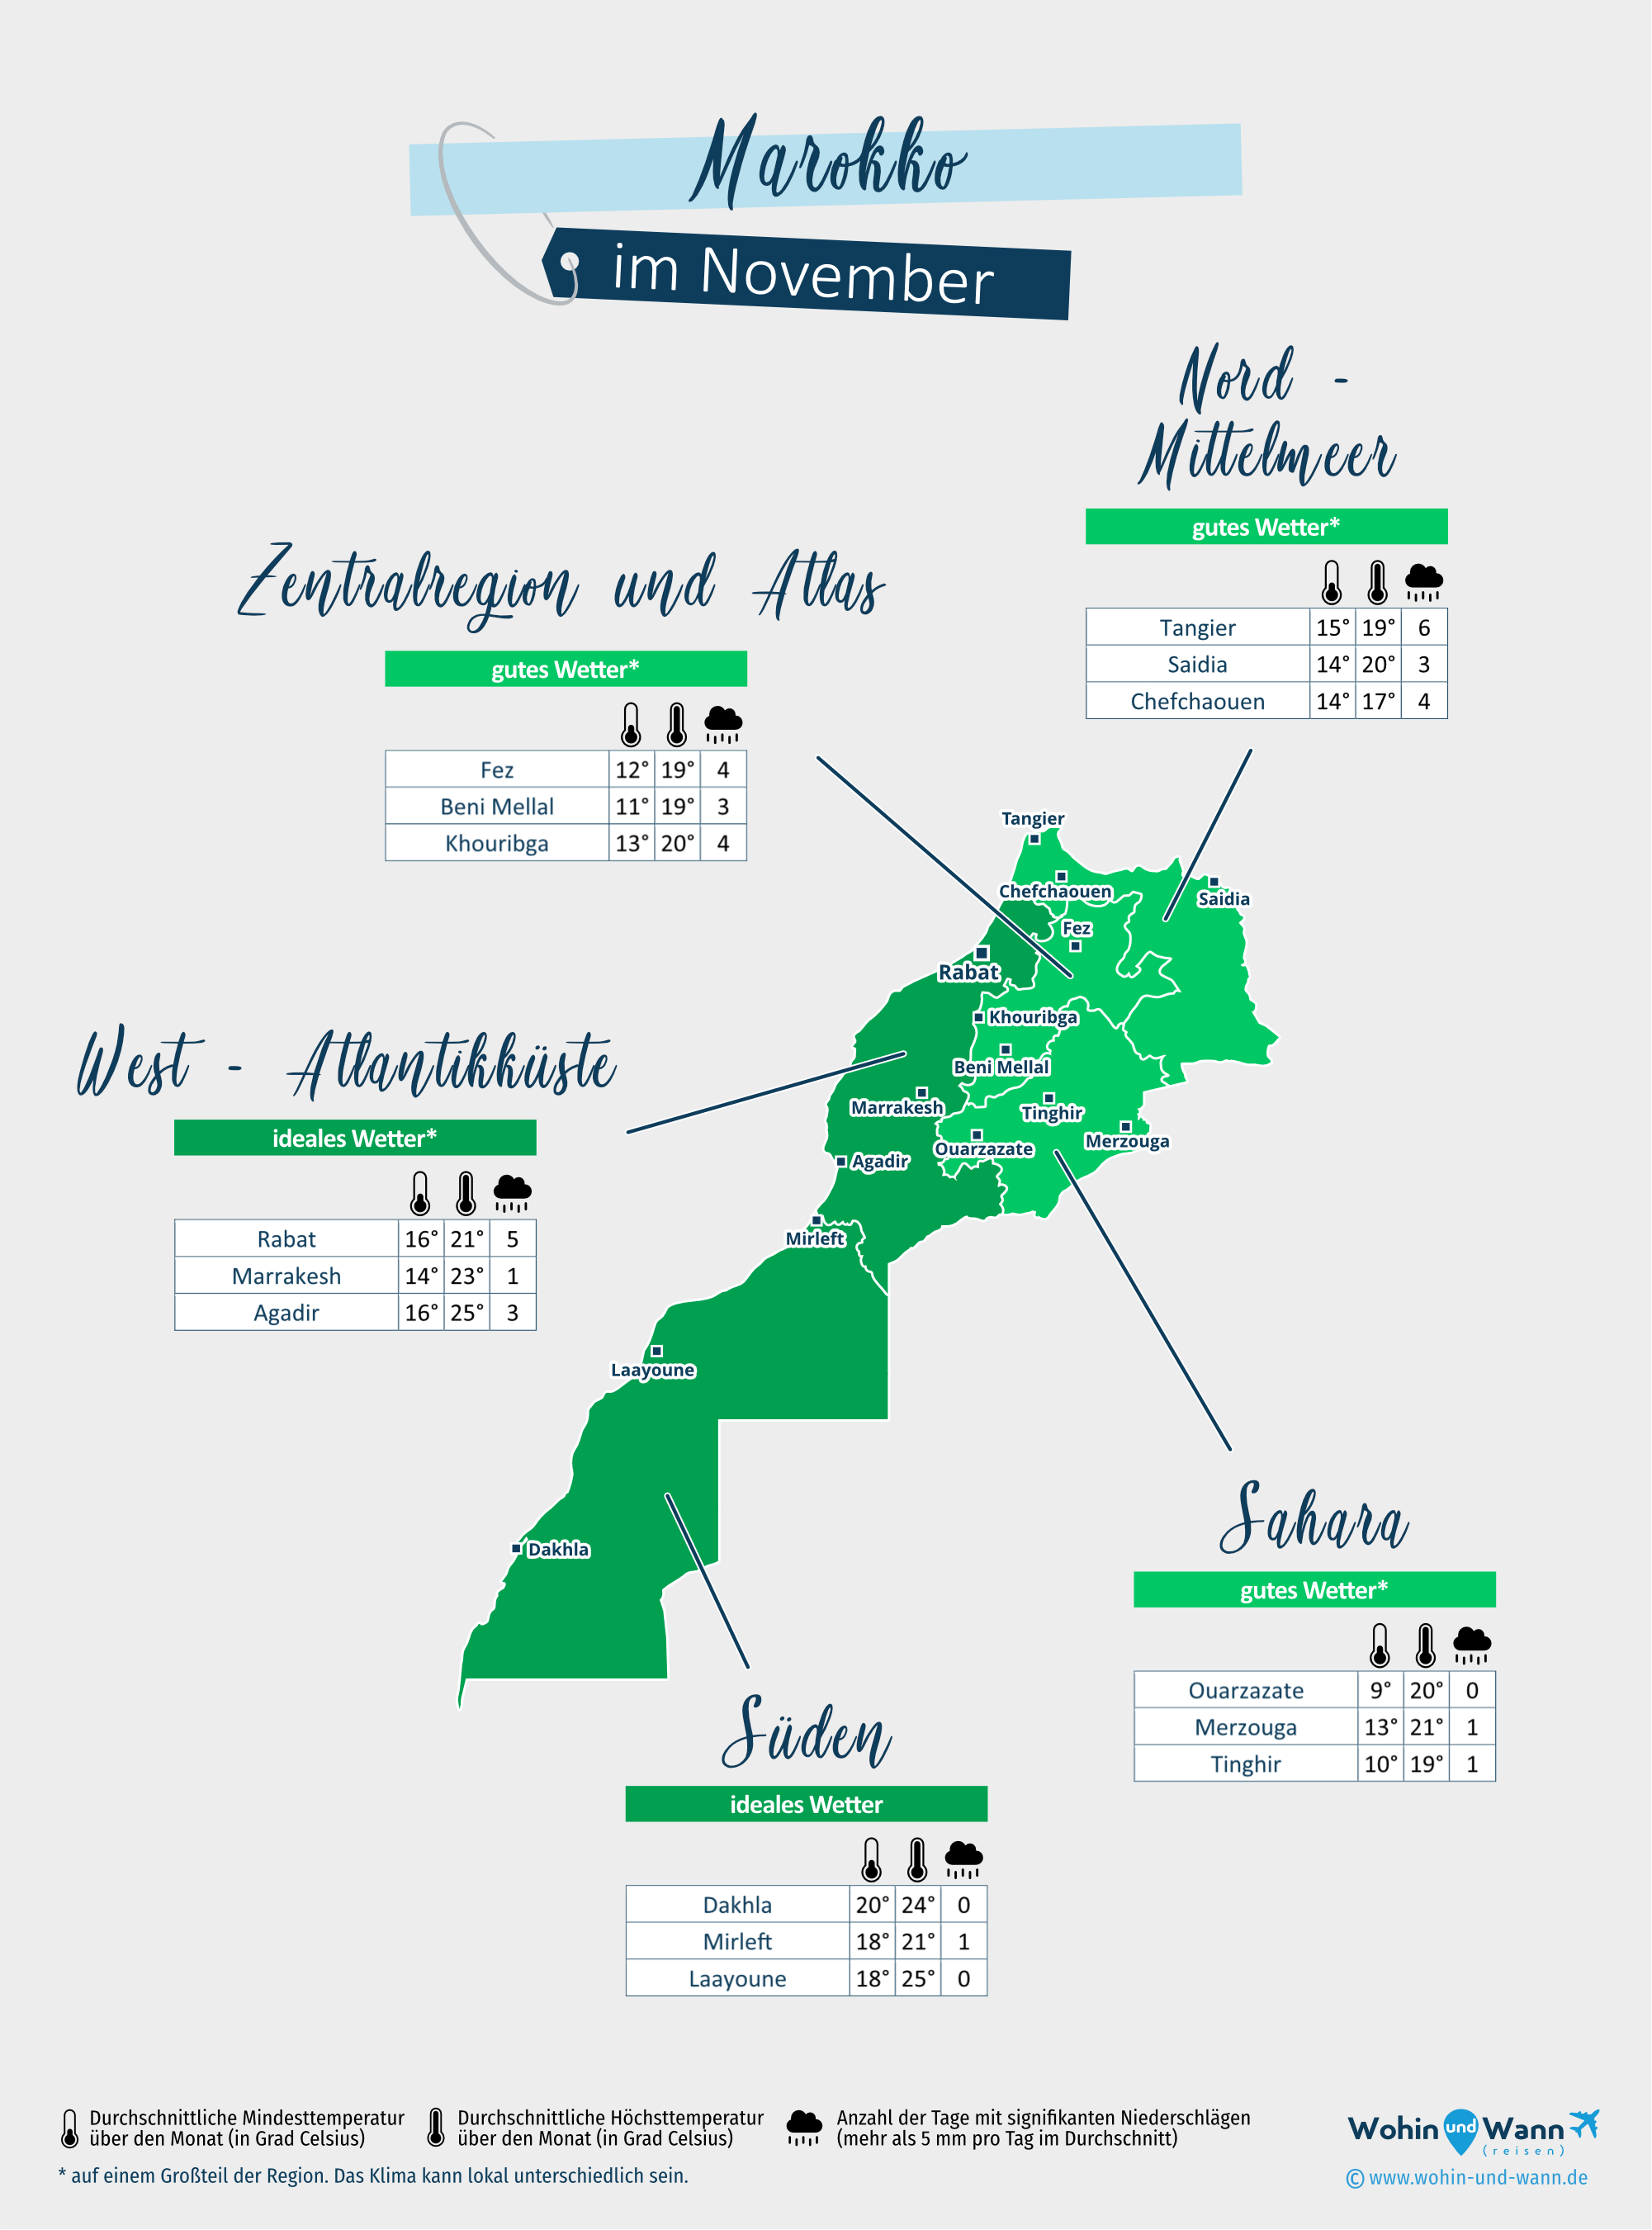 Marokko: Wetterkarte im November in verschiedenen Regionen